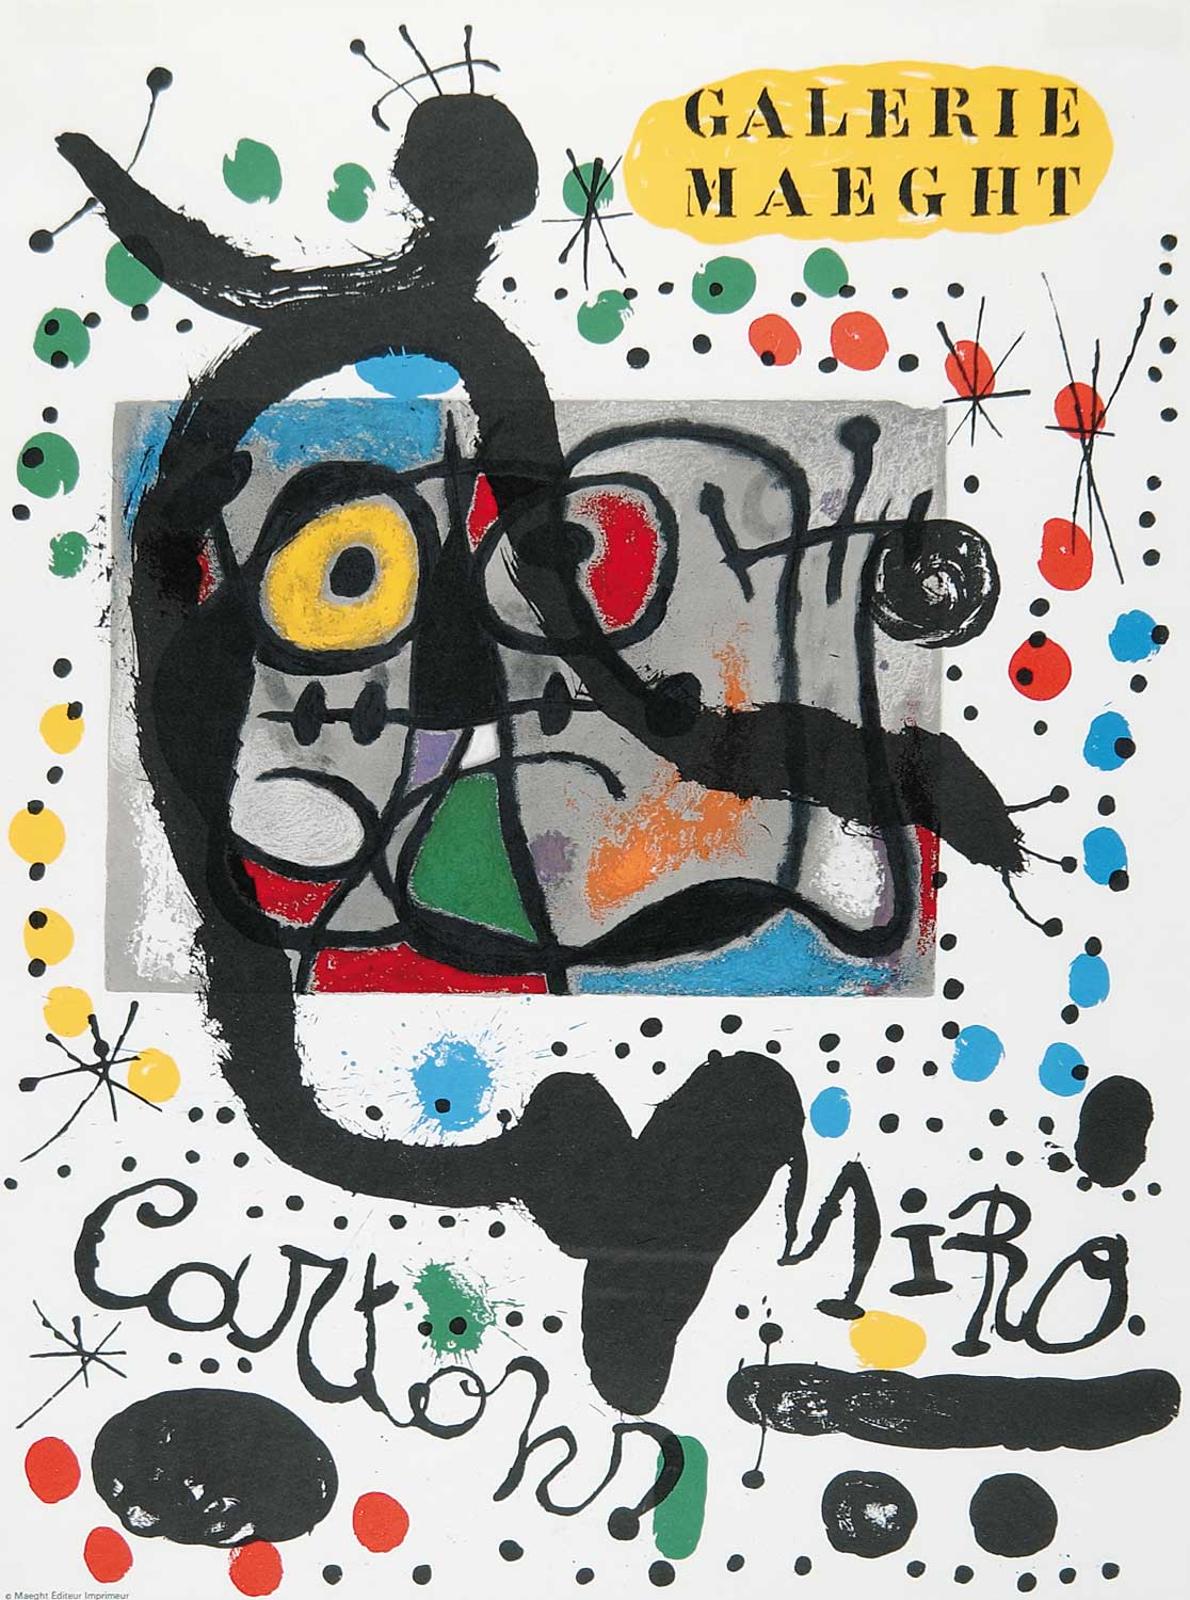 Joan Miró (1893-1983) - Gallerie Maeght - Miro